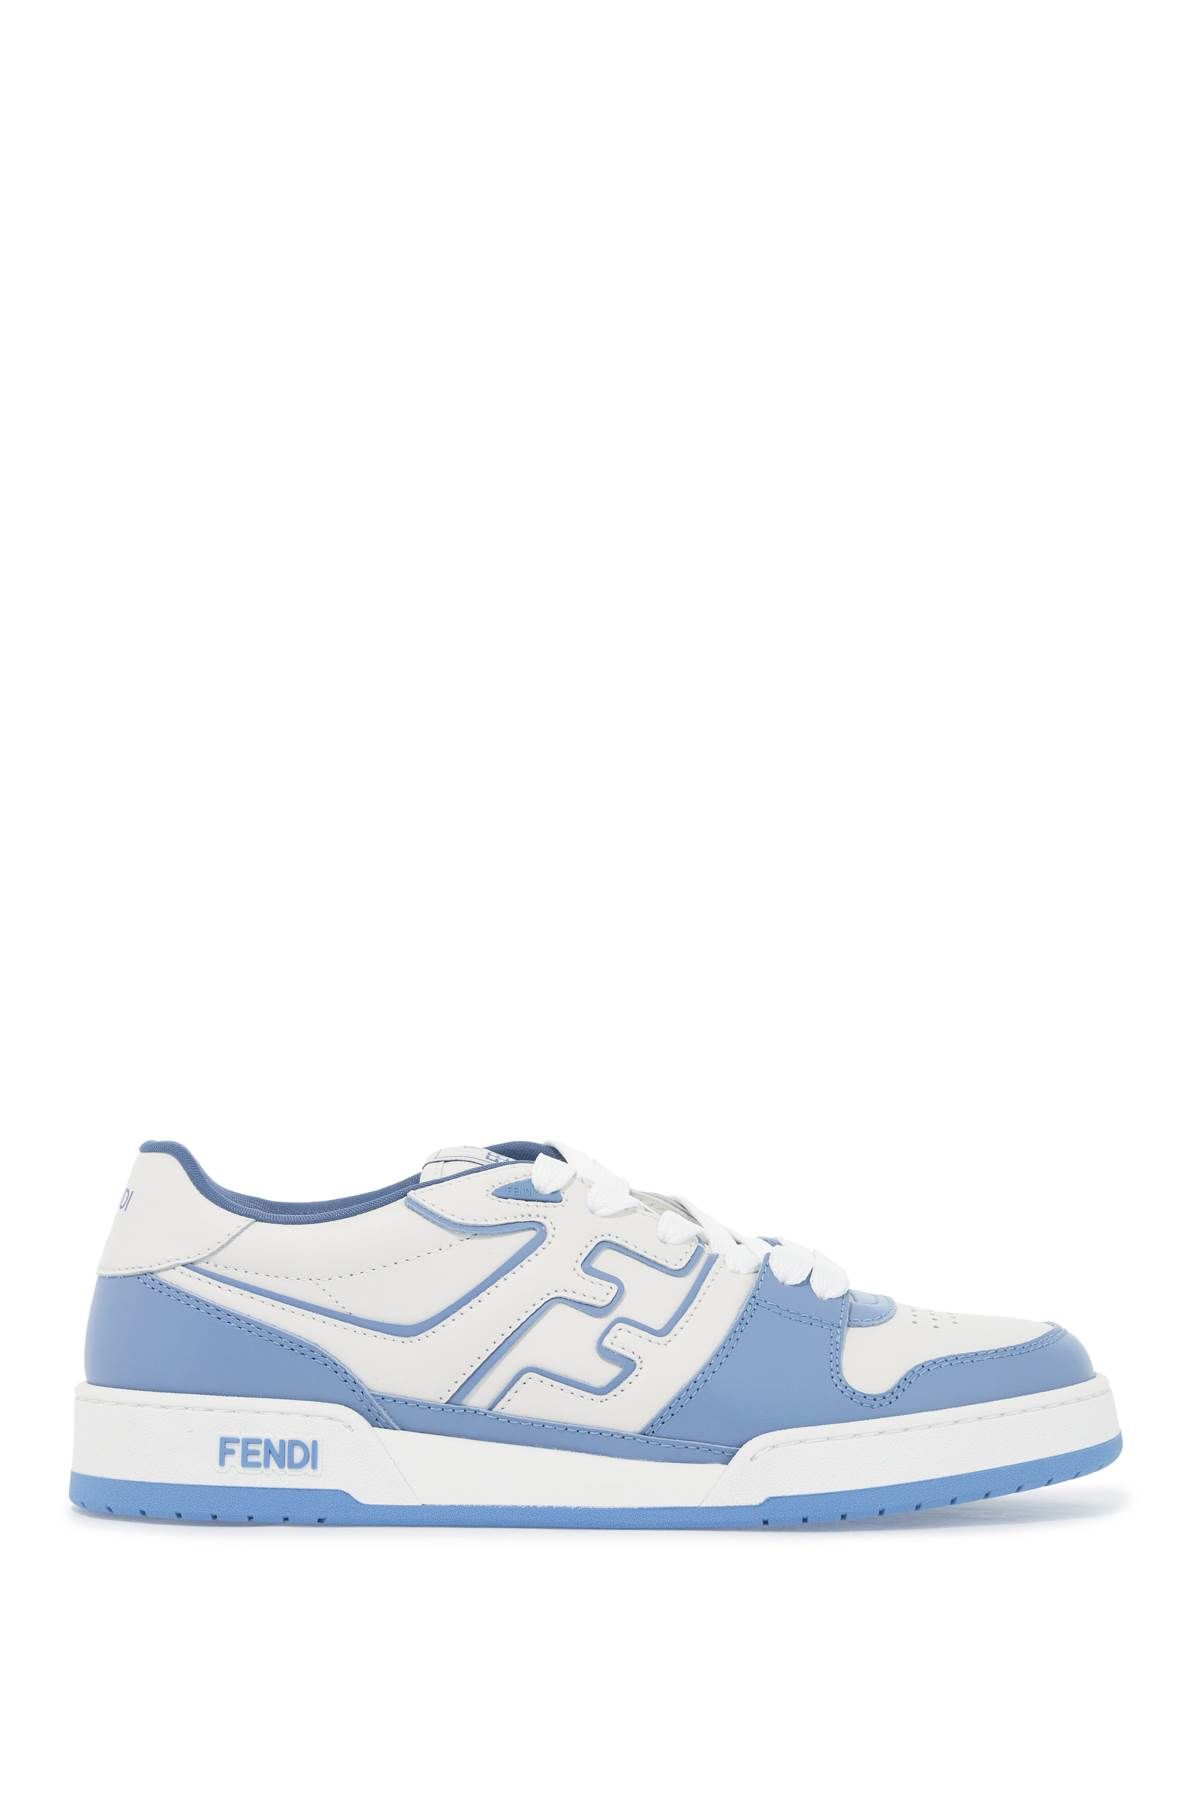 FENDI FENDI match sneakers